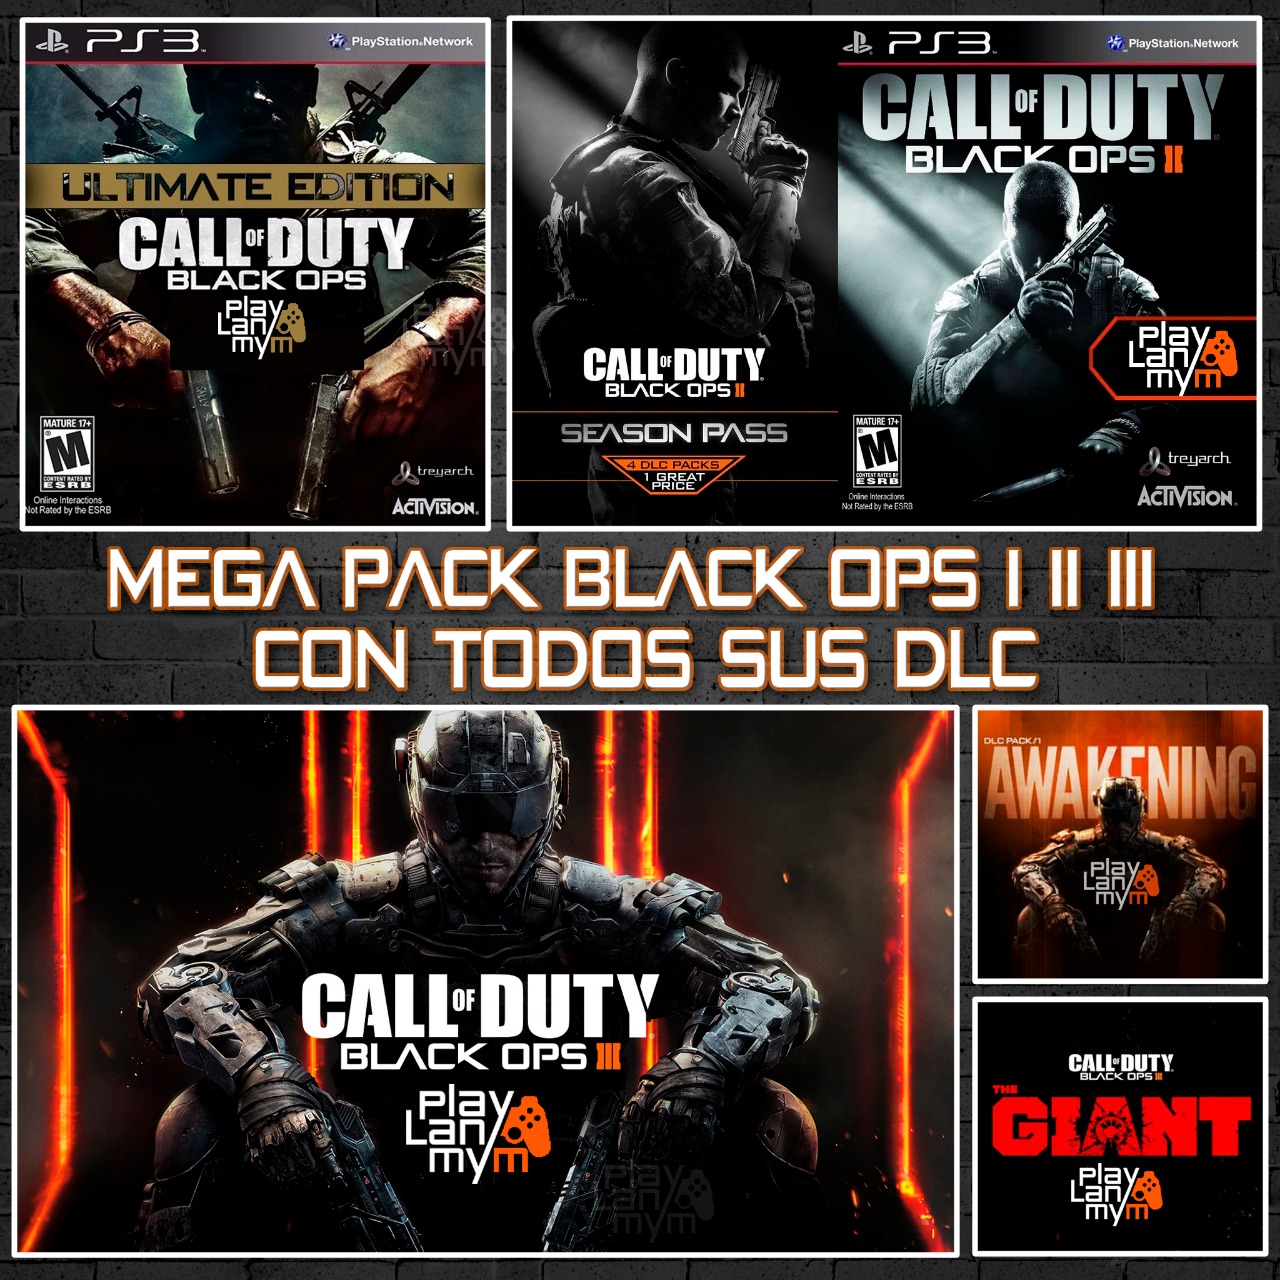 MEGA PACK BLACK OPS I II (AWAKENING DLC +THE GIANT DLC ) + SEASSON PASS COMPLETE (AUDIO ESPAÑOL) | La mejor tienda de juegos digitales :)